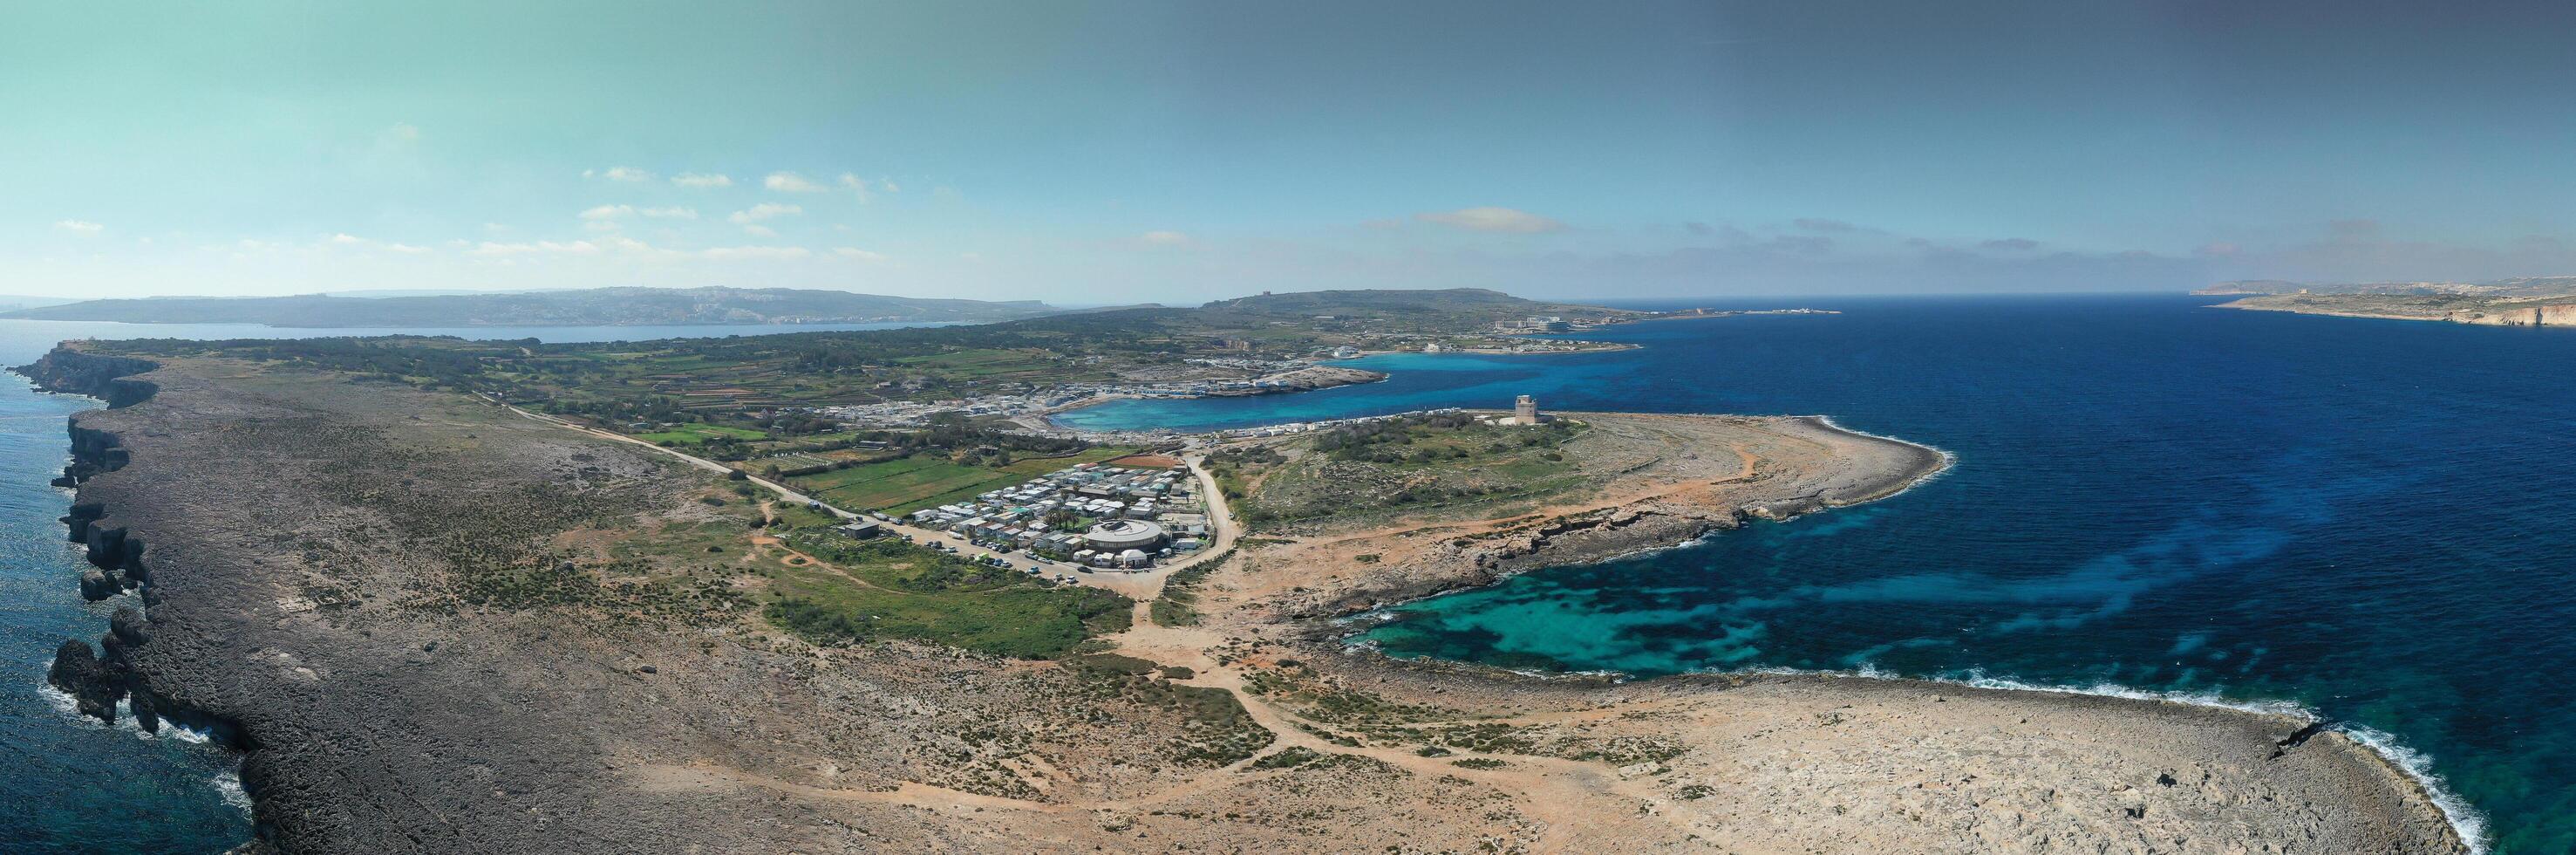 Coral Lagoon in Mellieha of Malta island. Aerial view photo